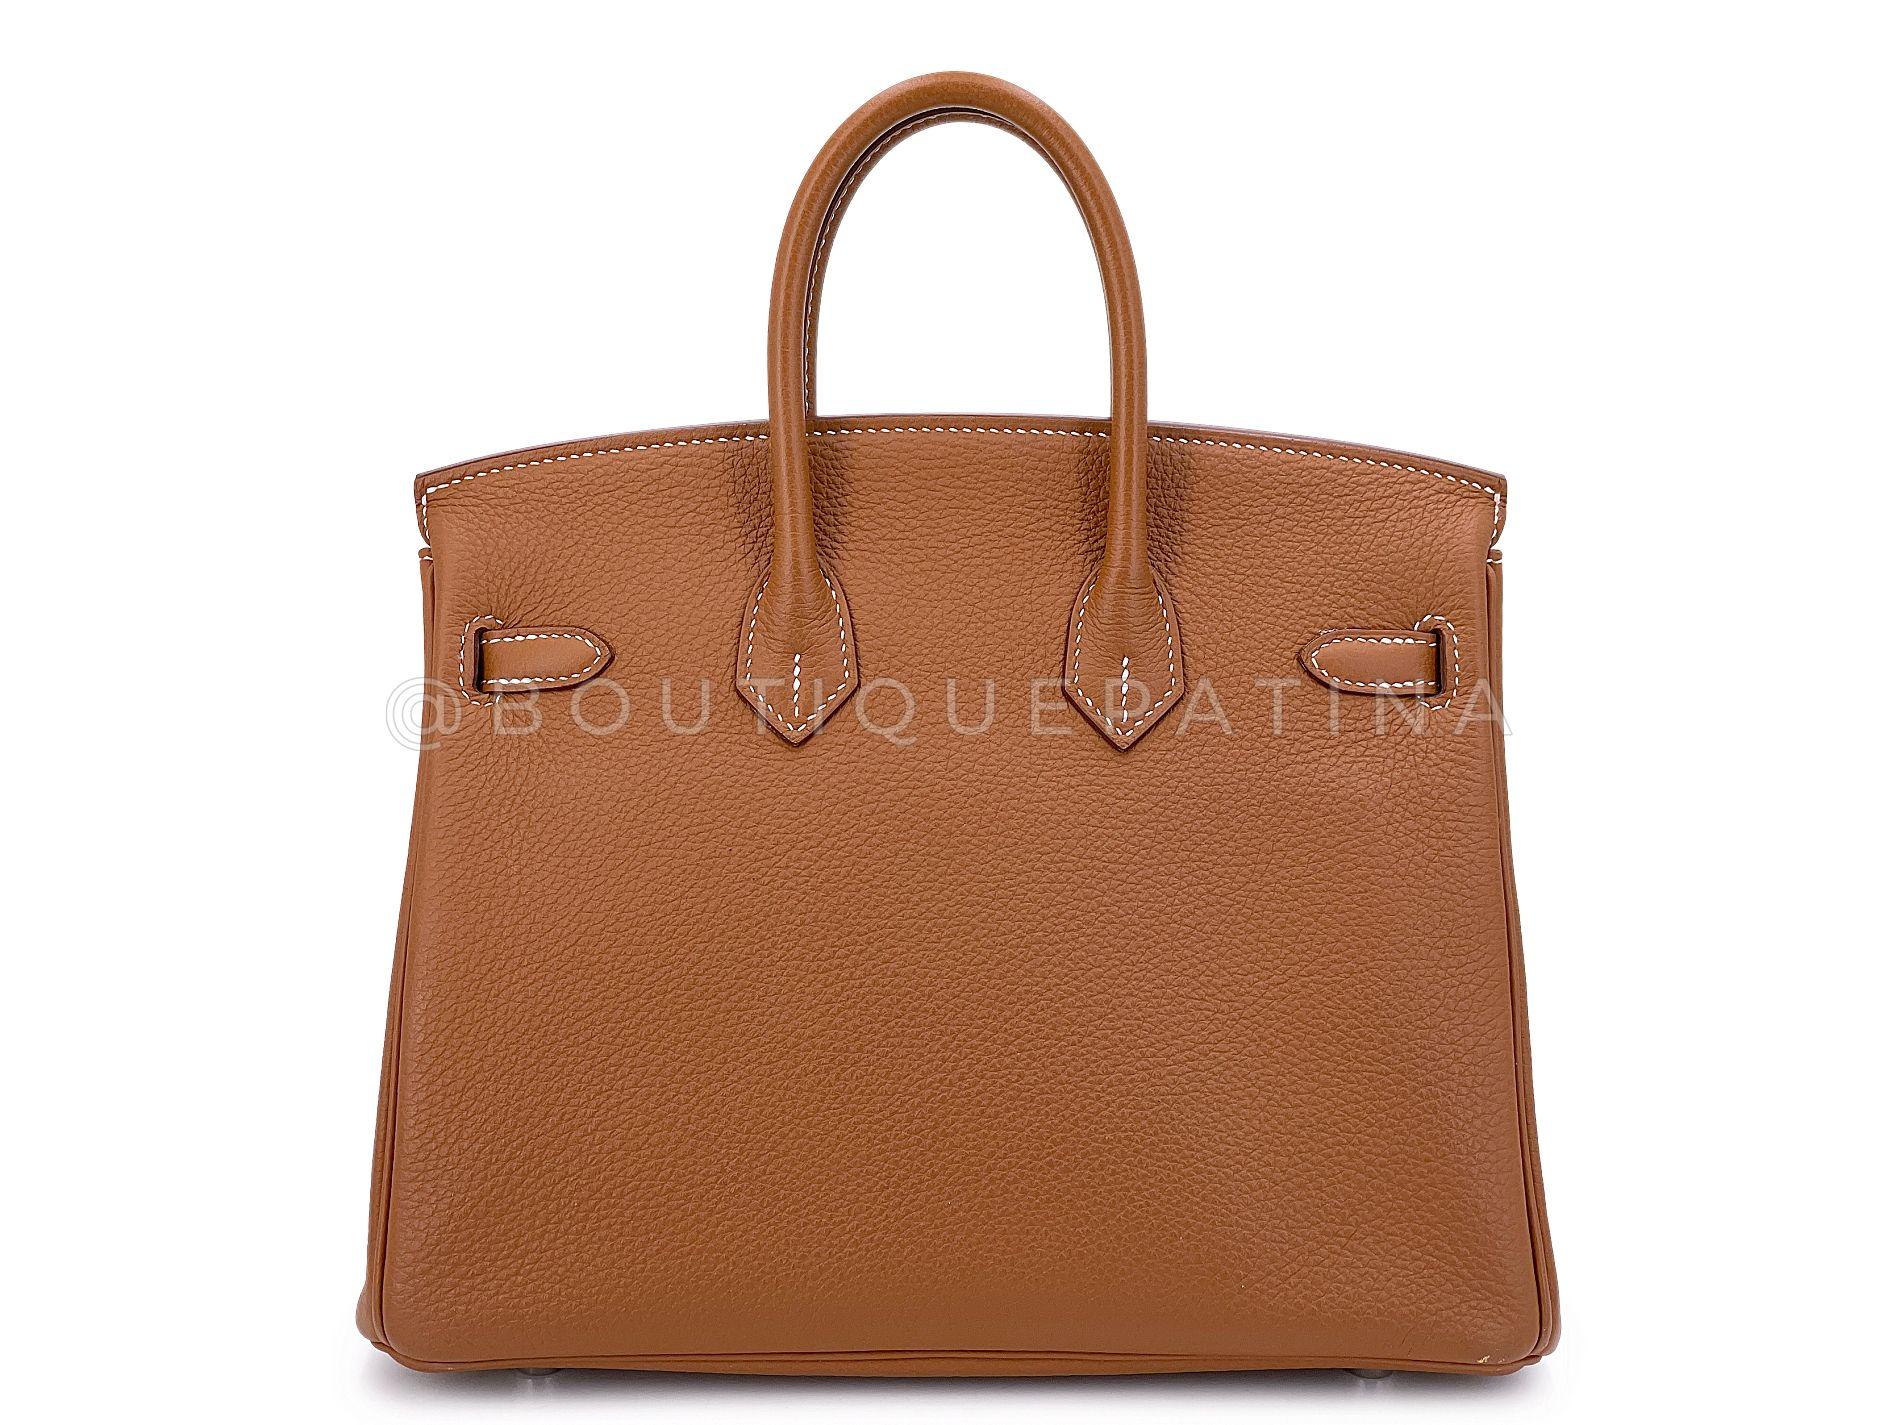 Hermès Gold Togo Birkin 25cm Tote Bag PHW 67913 Pour femmes en vente